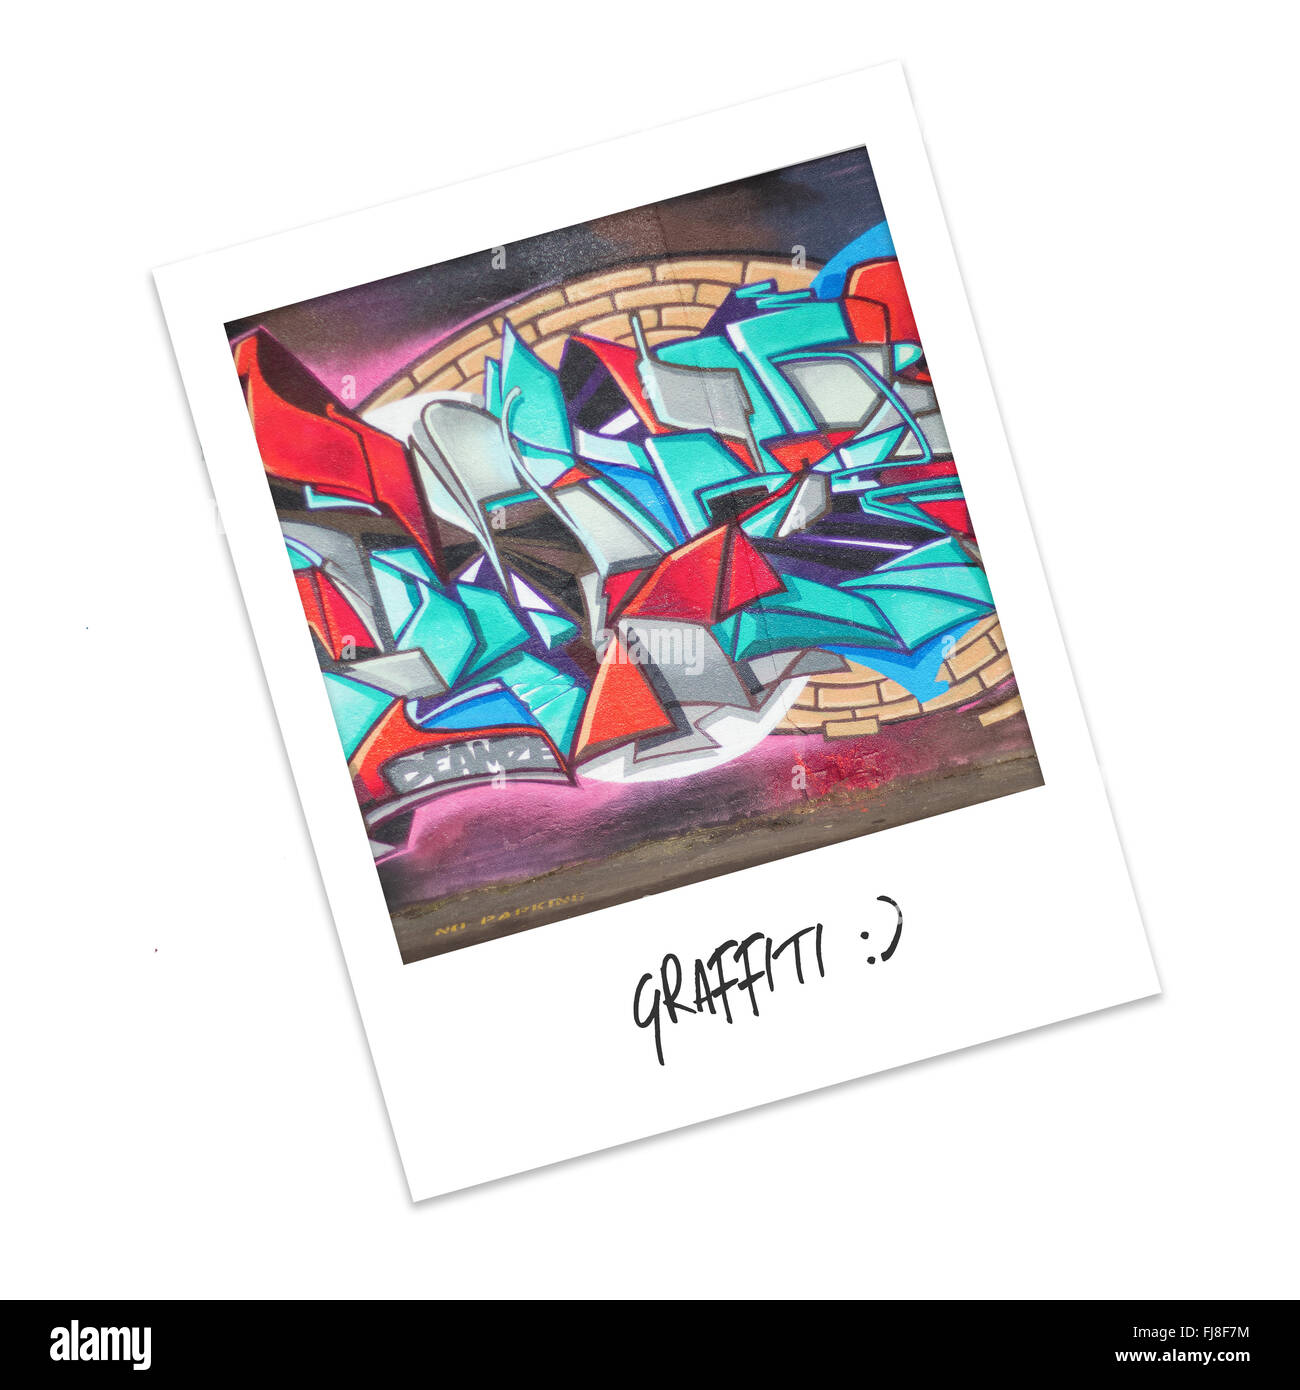 Graffiti art, splash art, street art, spray paint, colourful art | Poster